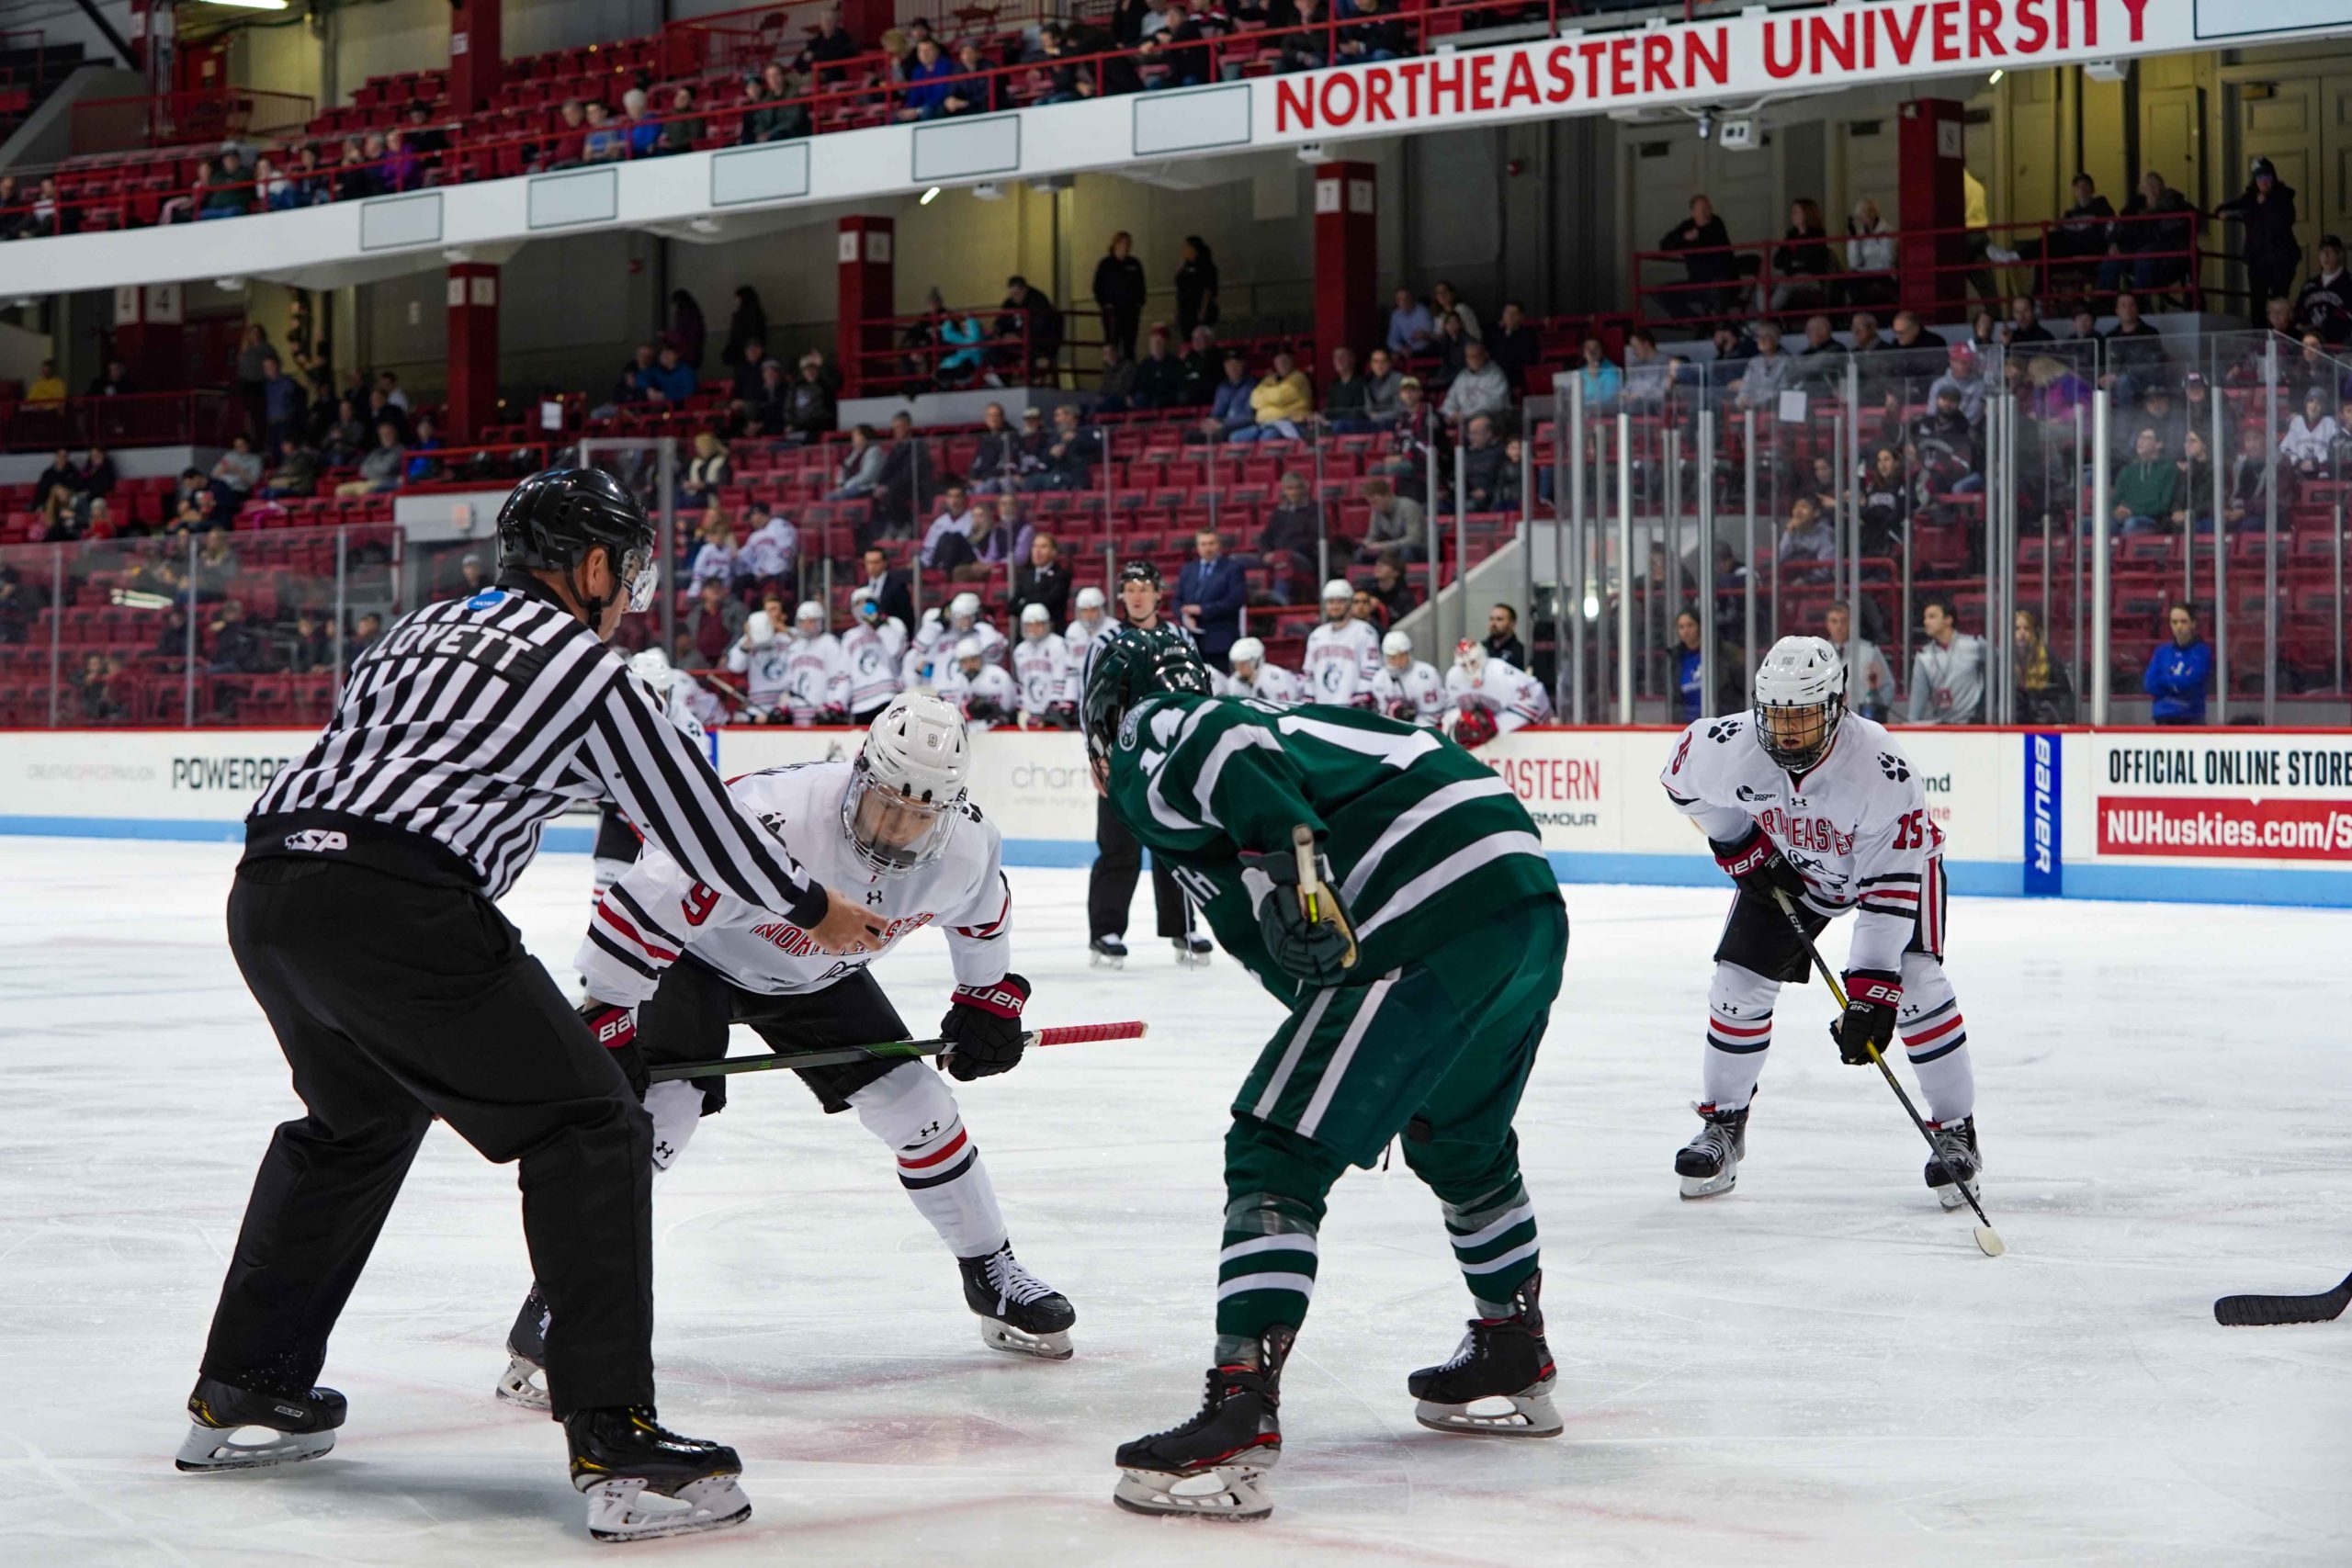 Photo Gallery: Northeastern vs. Dartmouth (12/14/19)